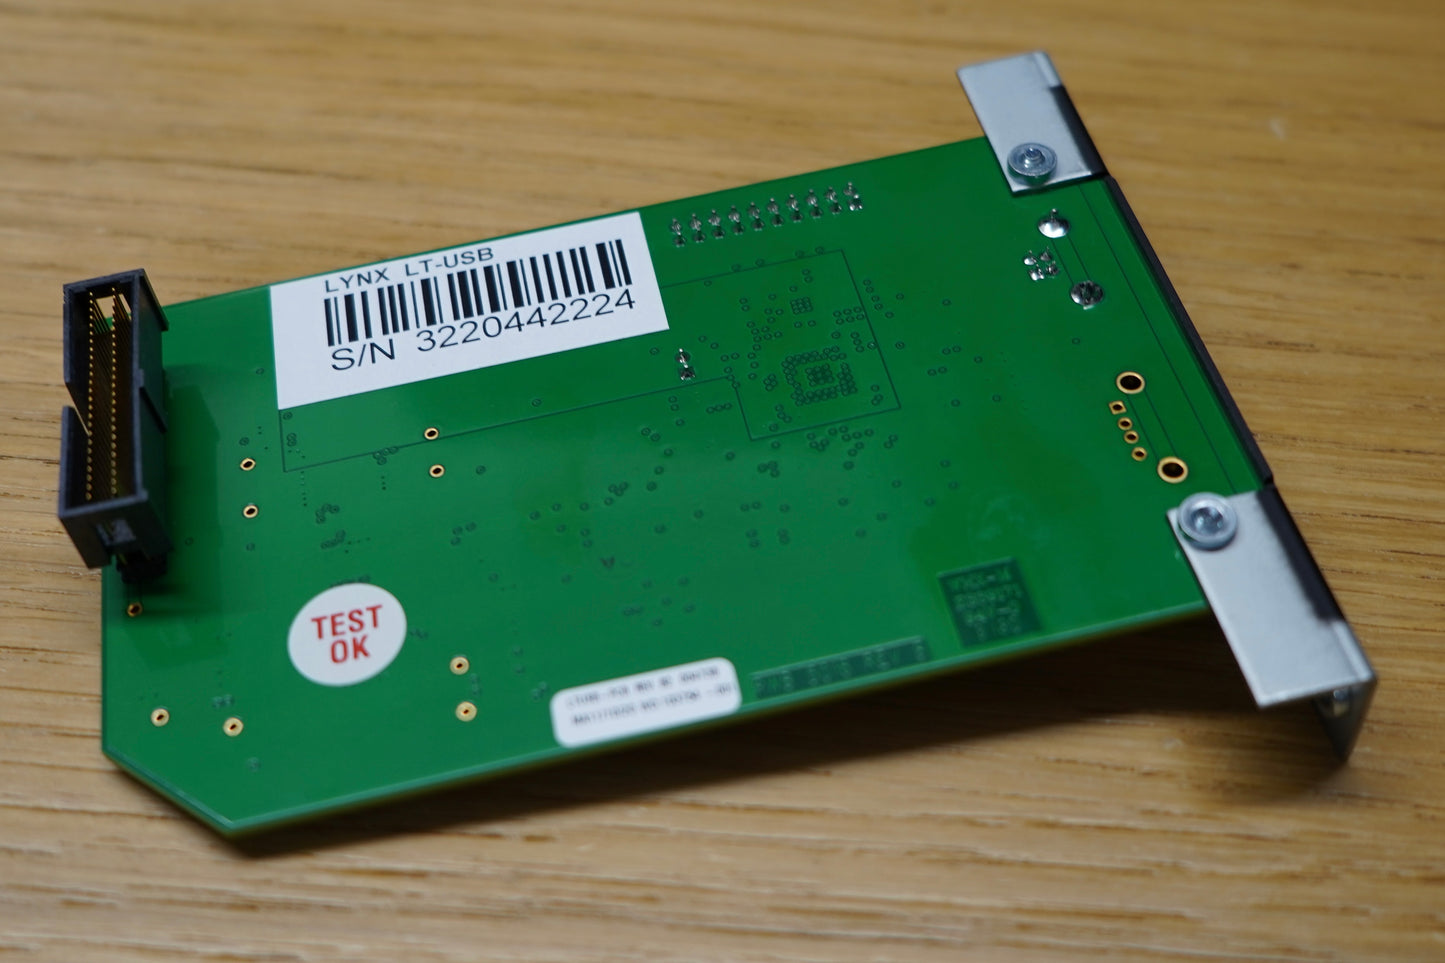 Lynx LT-USB Card